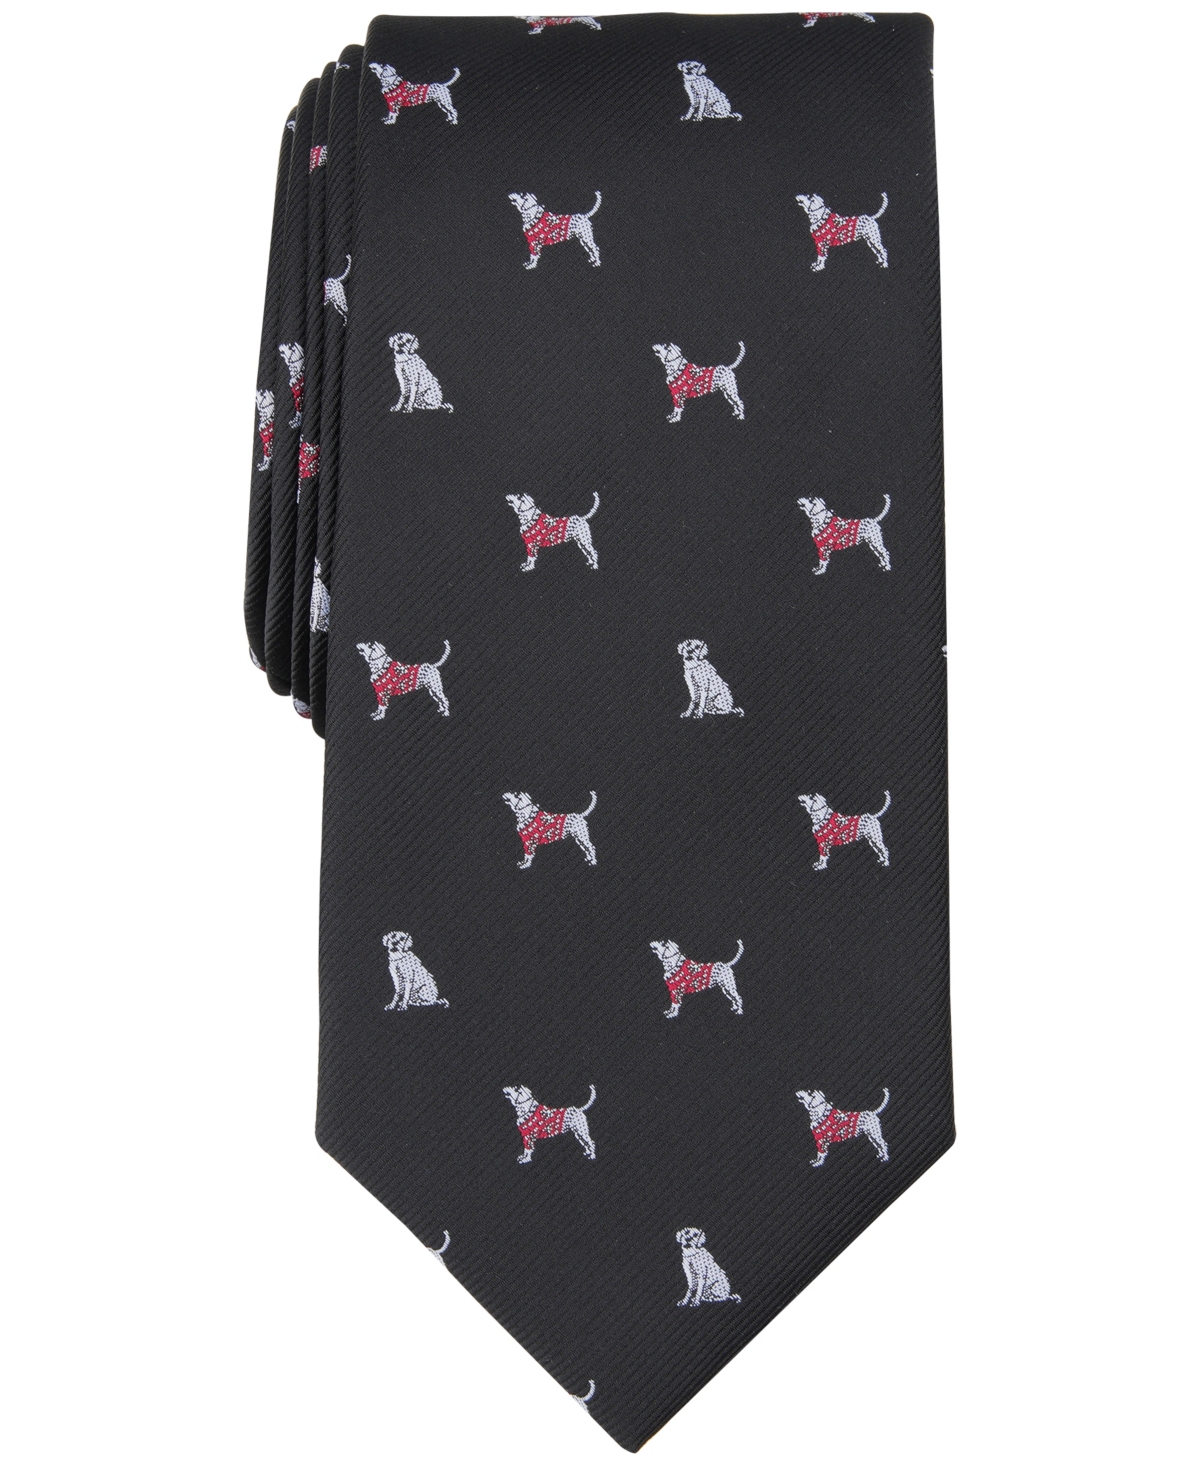 Men's Sweater Dog Tie, Created for Macy's - Onyx